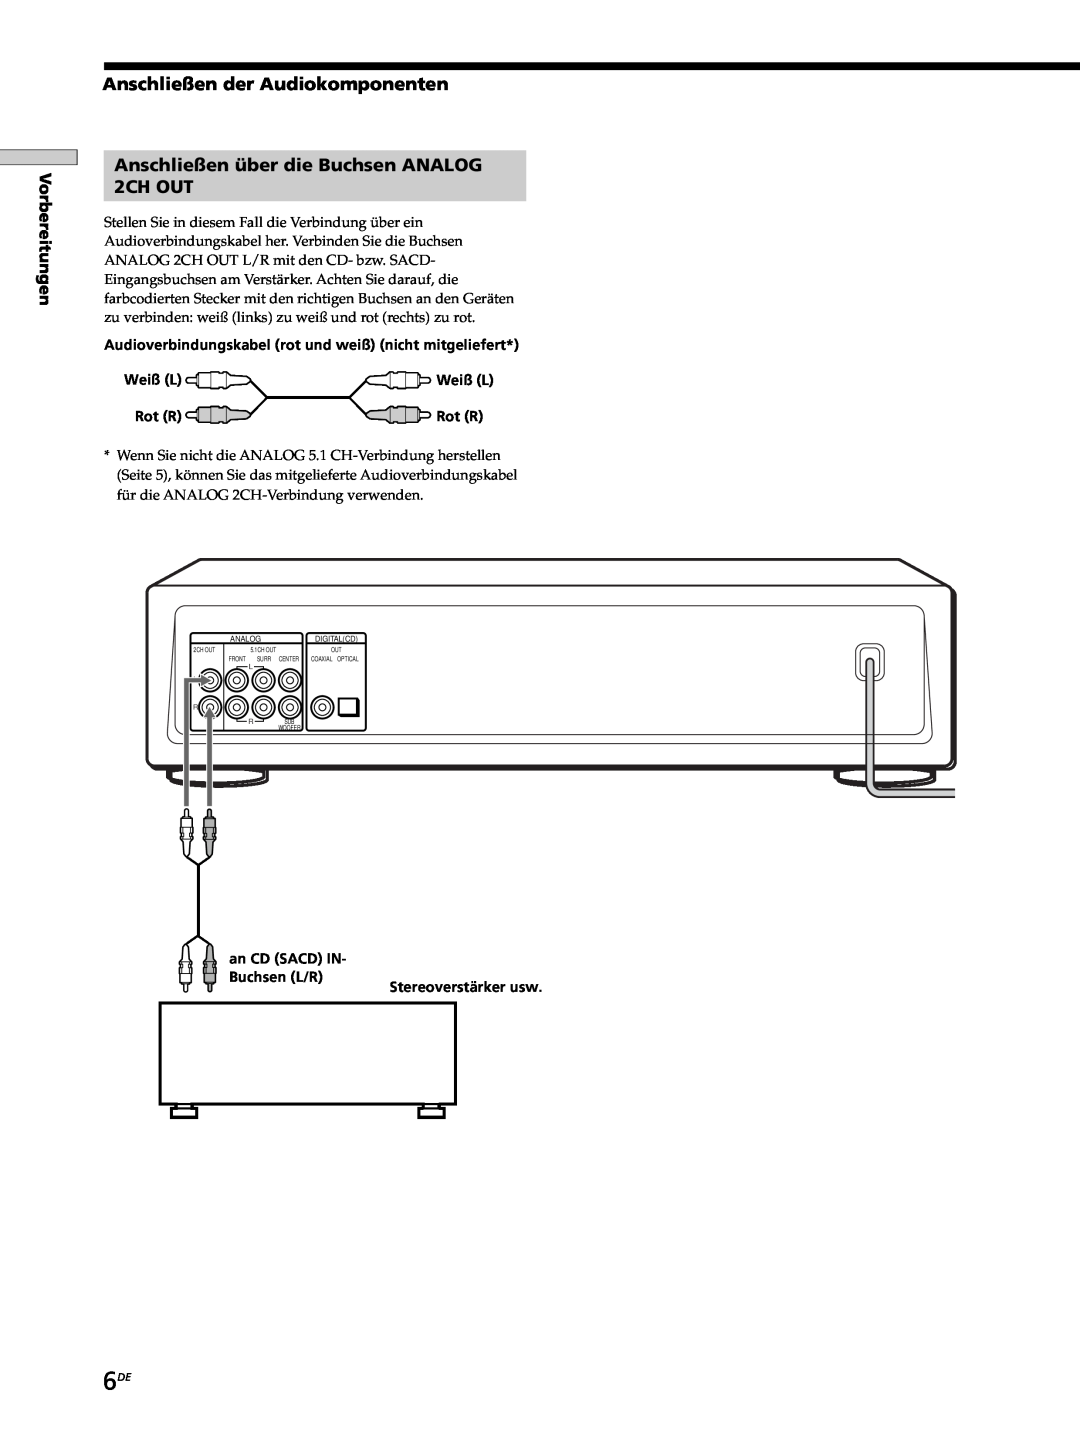 Sony SCD-XB770 operating instructions Anschließen der Audiokomponenten, Anschließen über die Buchsen ANALOG 2CH OUT, Rot R 